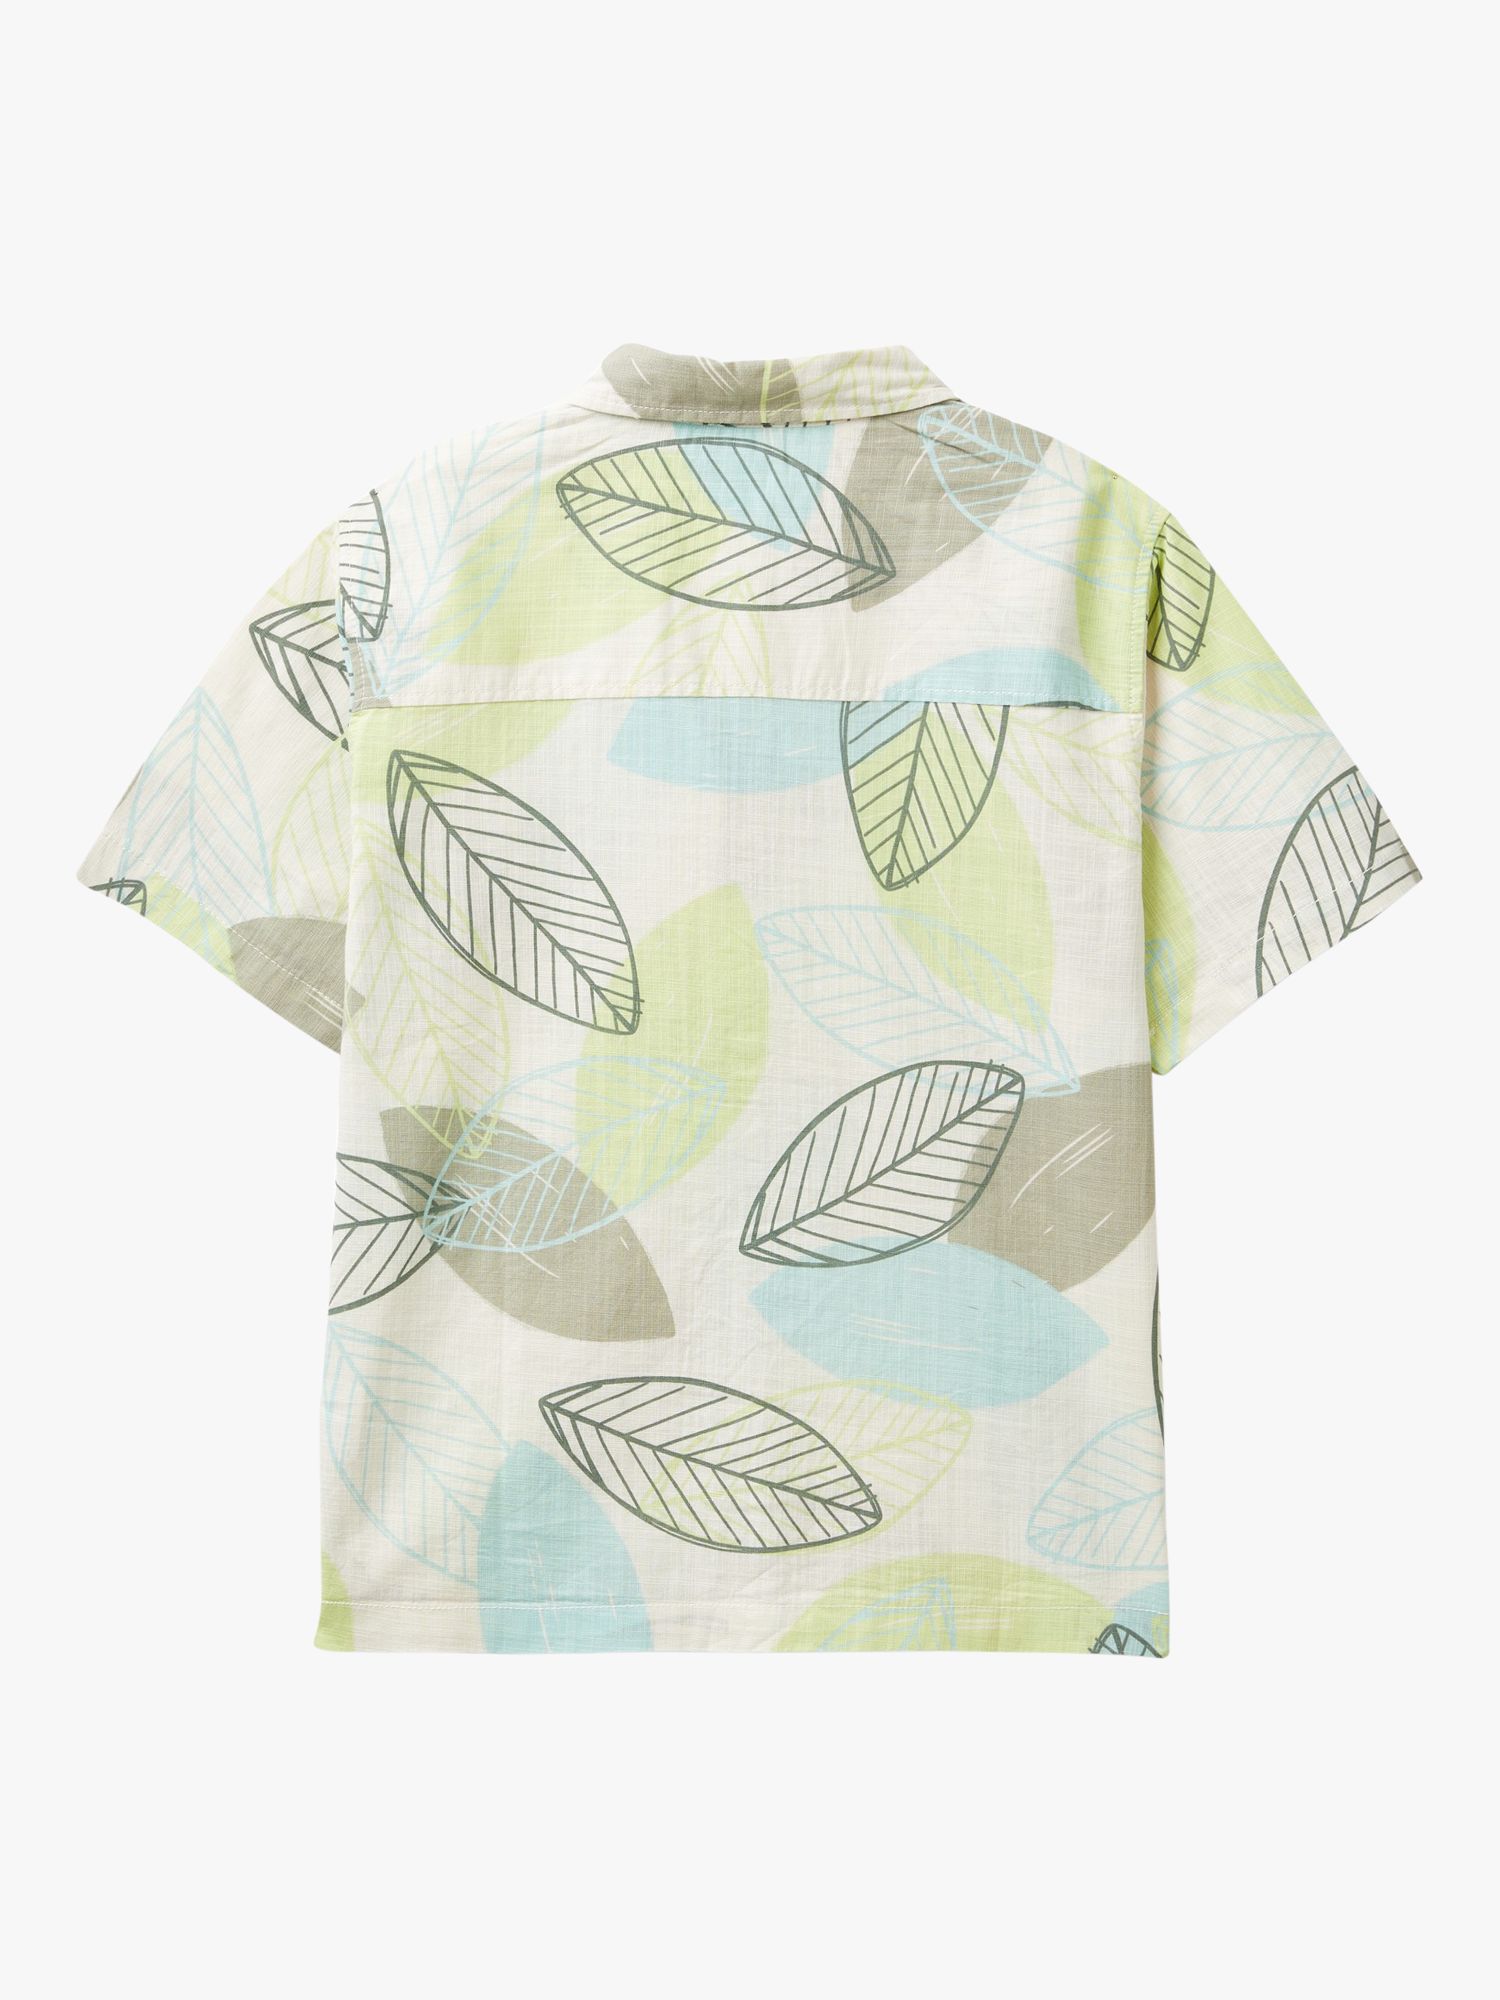 Benetton Kids' Short Sleeve Leaf Print Cotton Shirt, Multi, 6-7 years